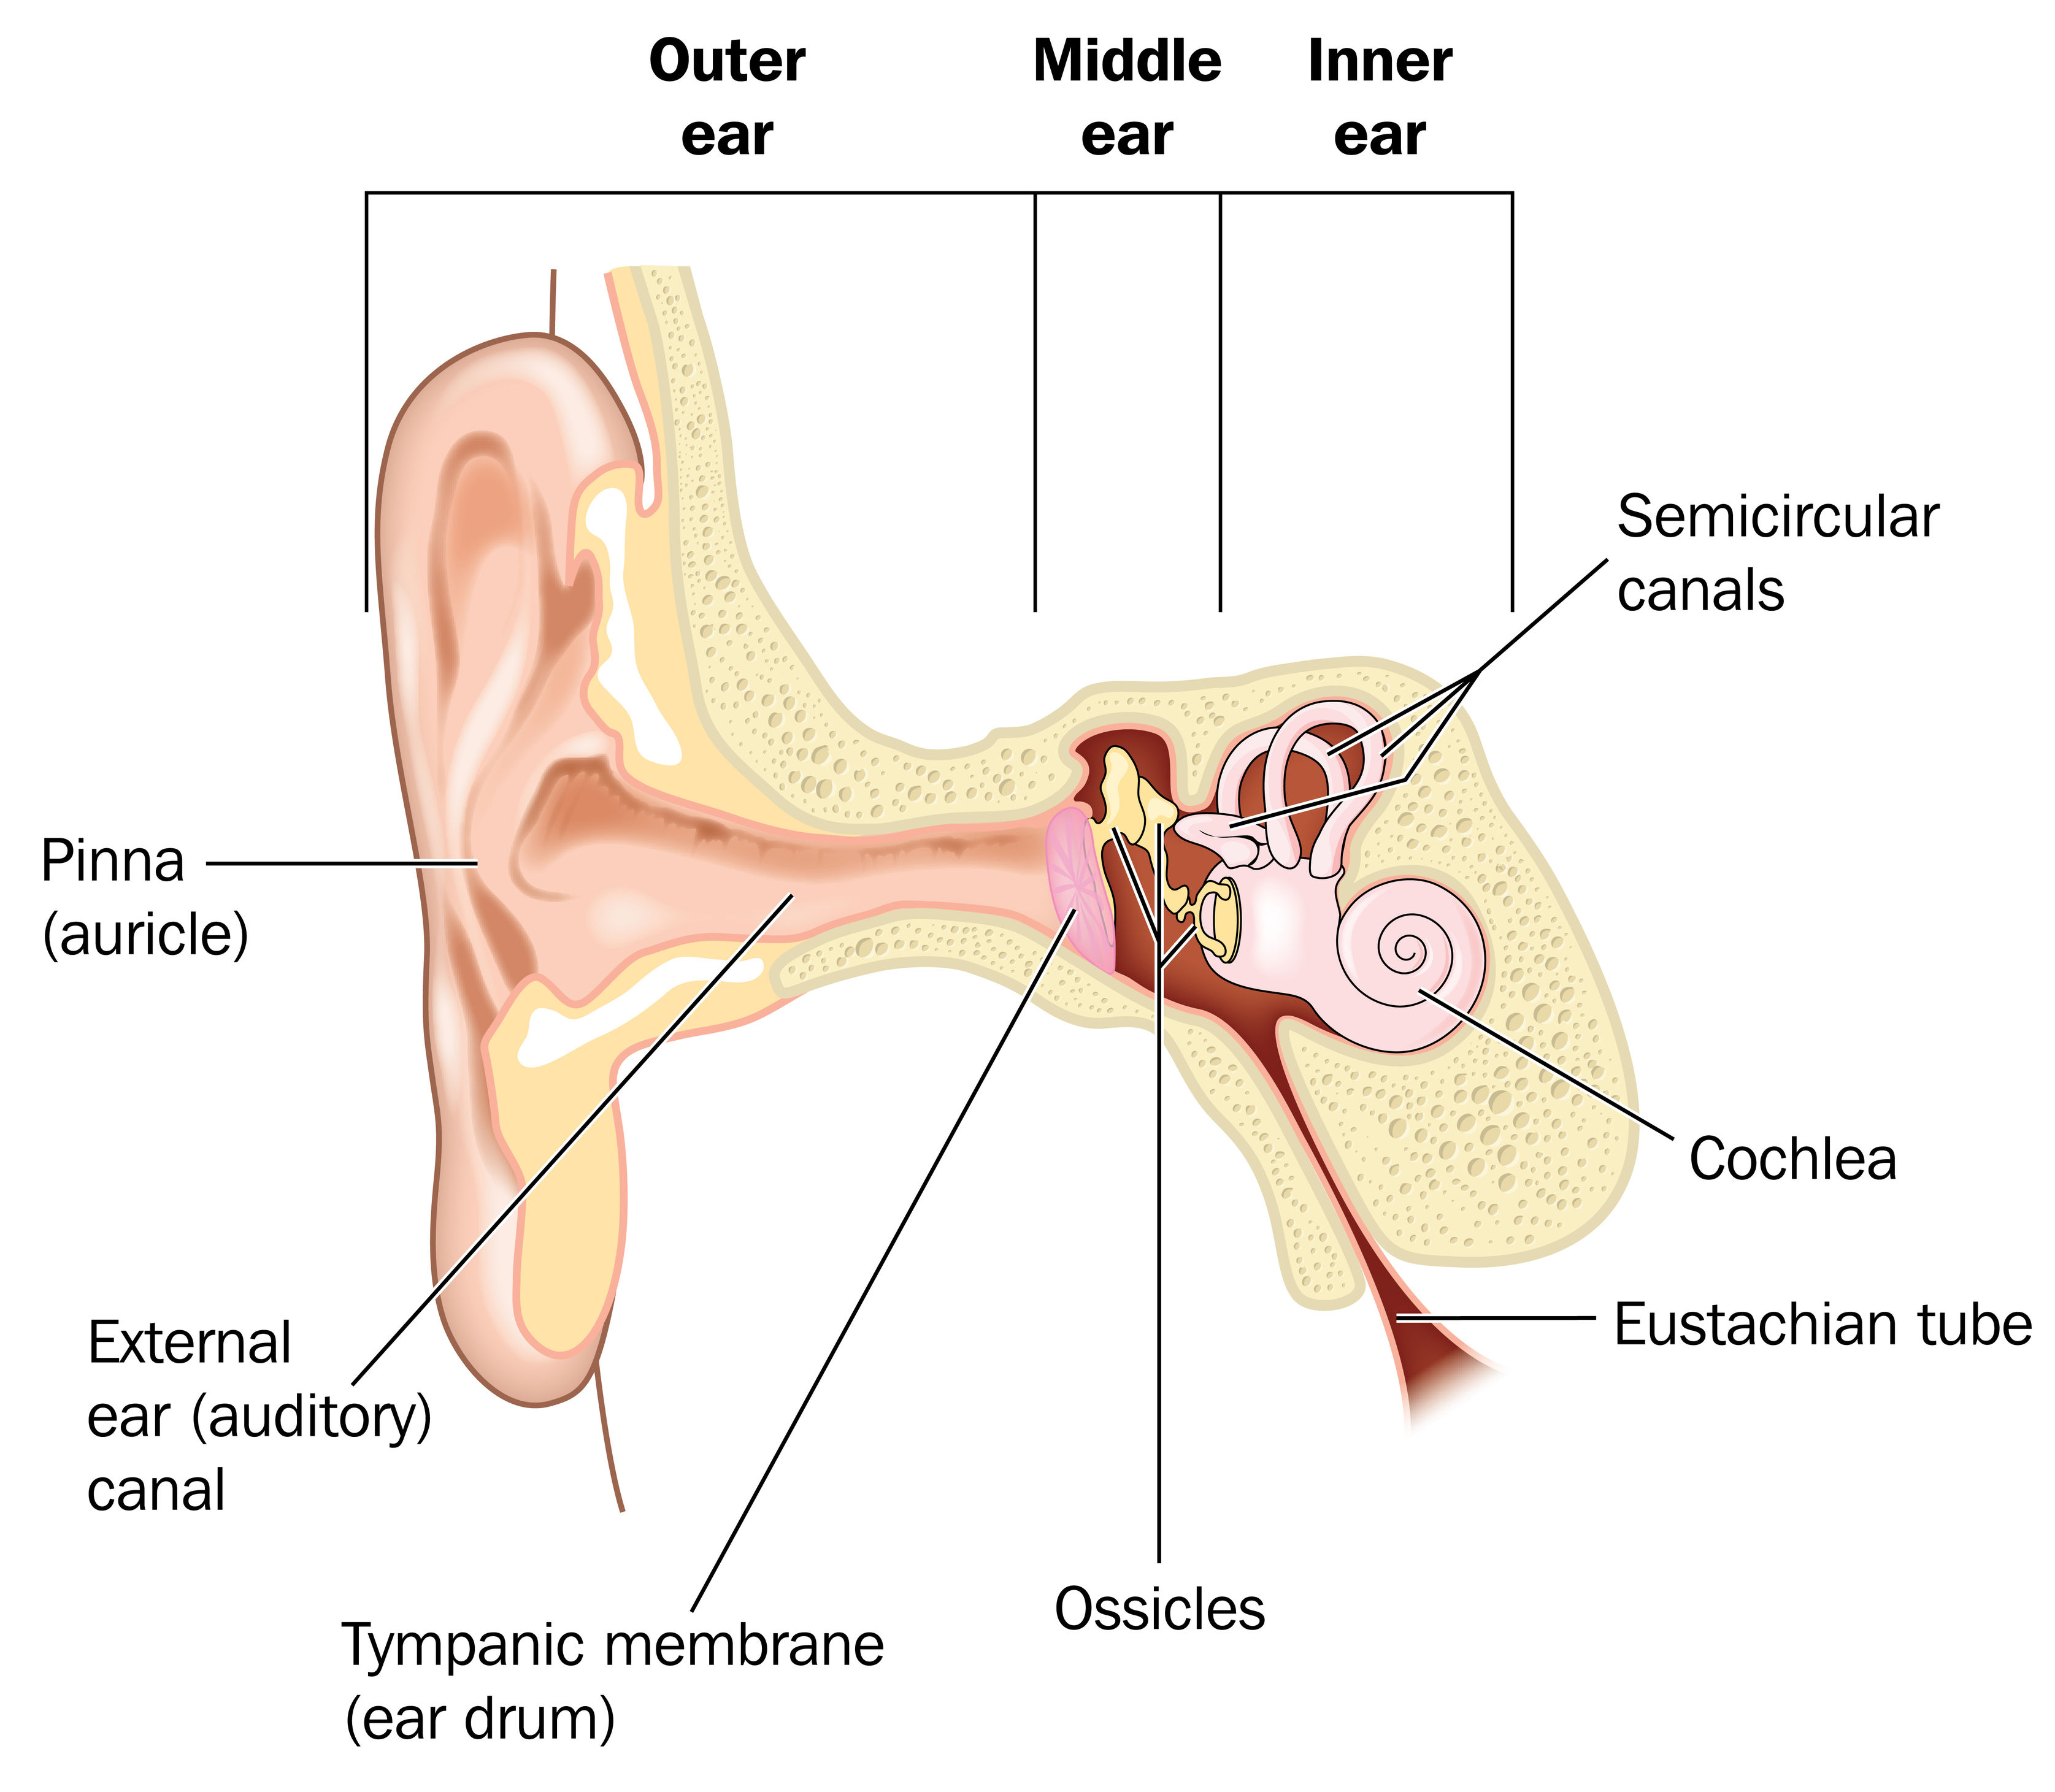 Ear anatomy - featuring the external ear, the middle ear and the inner ear. 